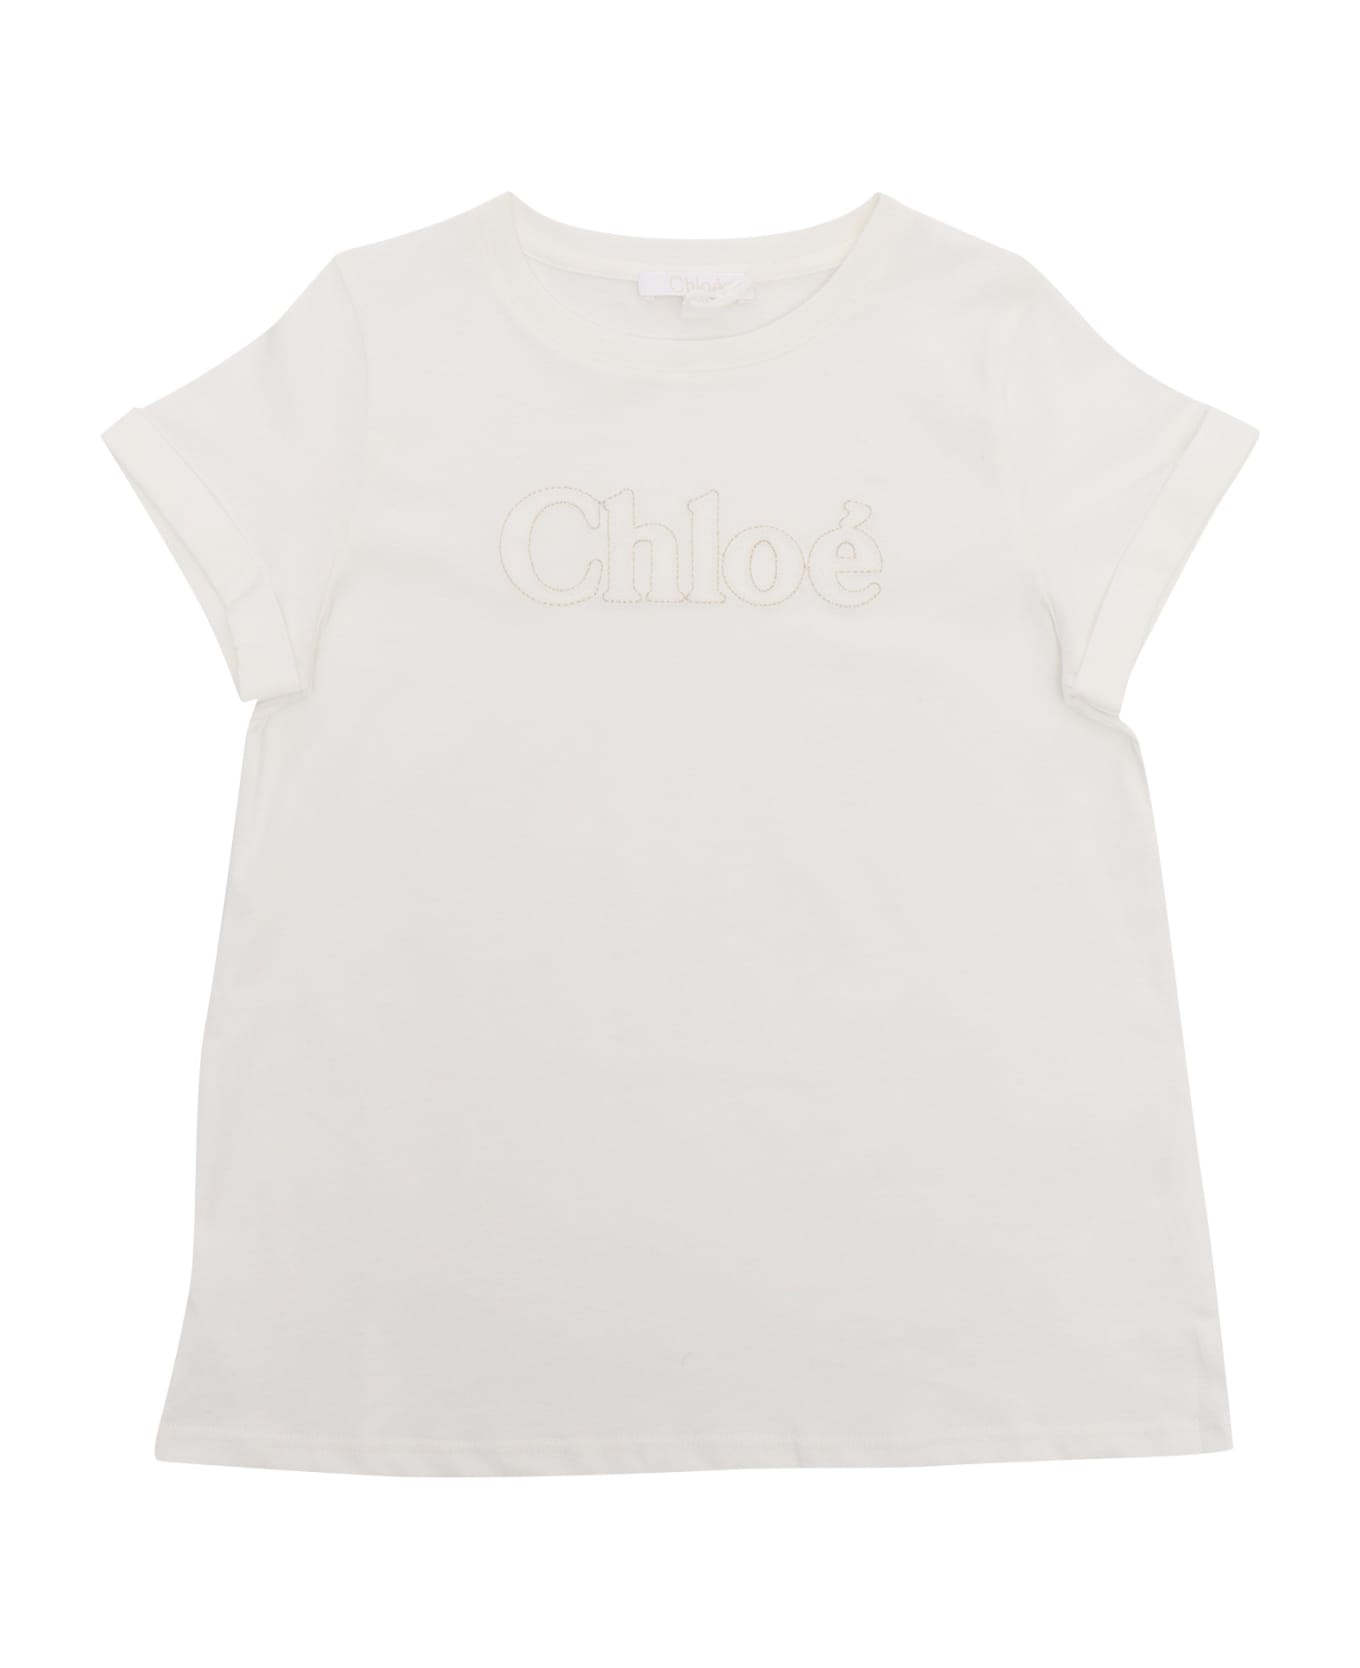 Chloé White T-shirt With Logo - WHITE